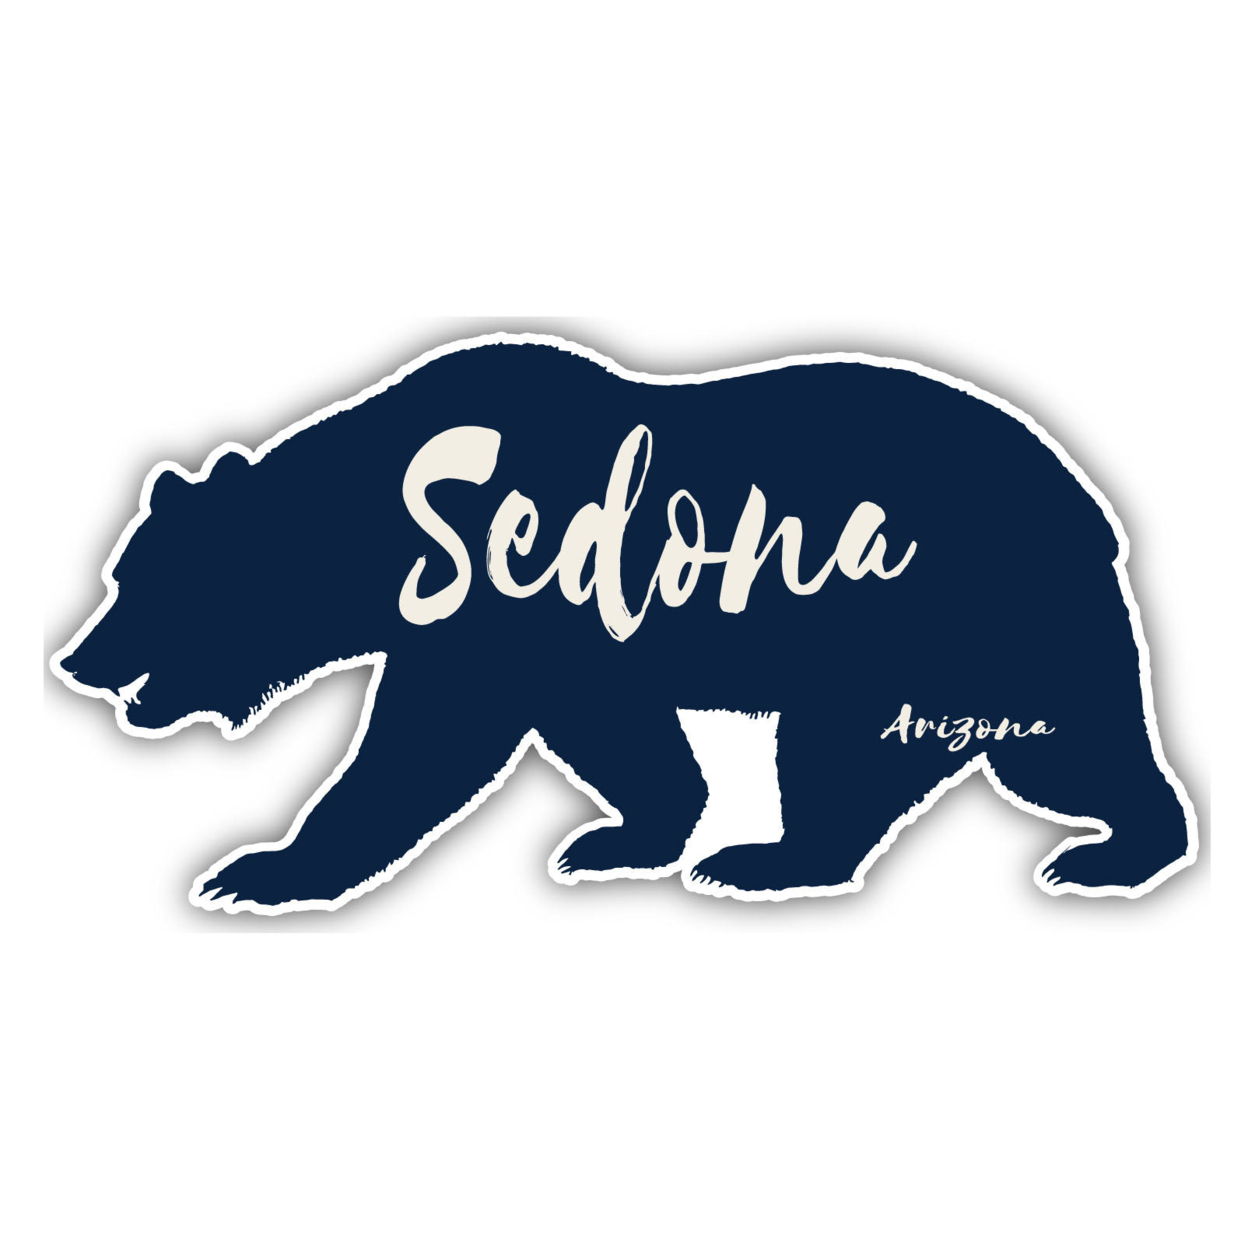 Sedona Arizona Souvenir Decorative Stickers (Choose Theme And Size) - Single Unit, 2-Inch, Bear